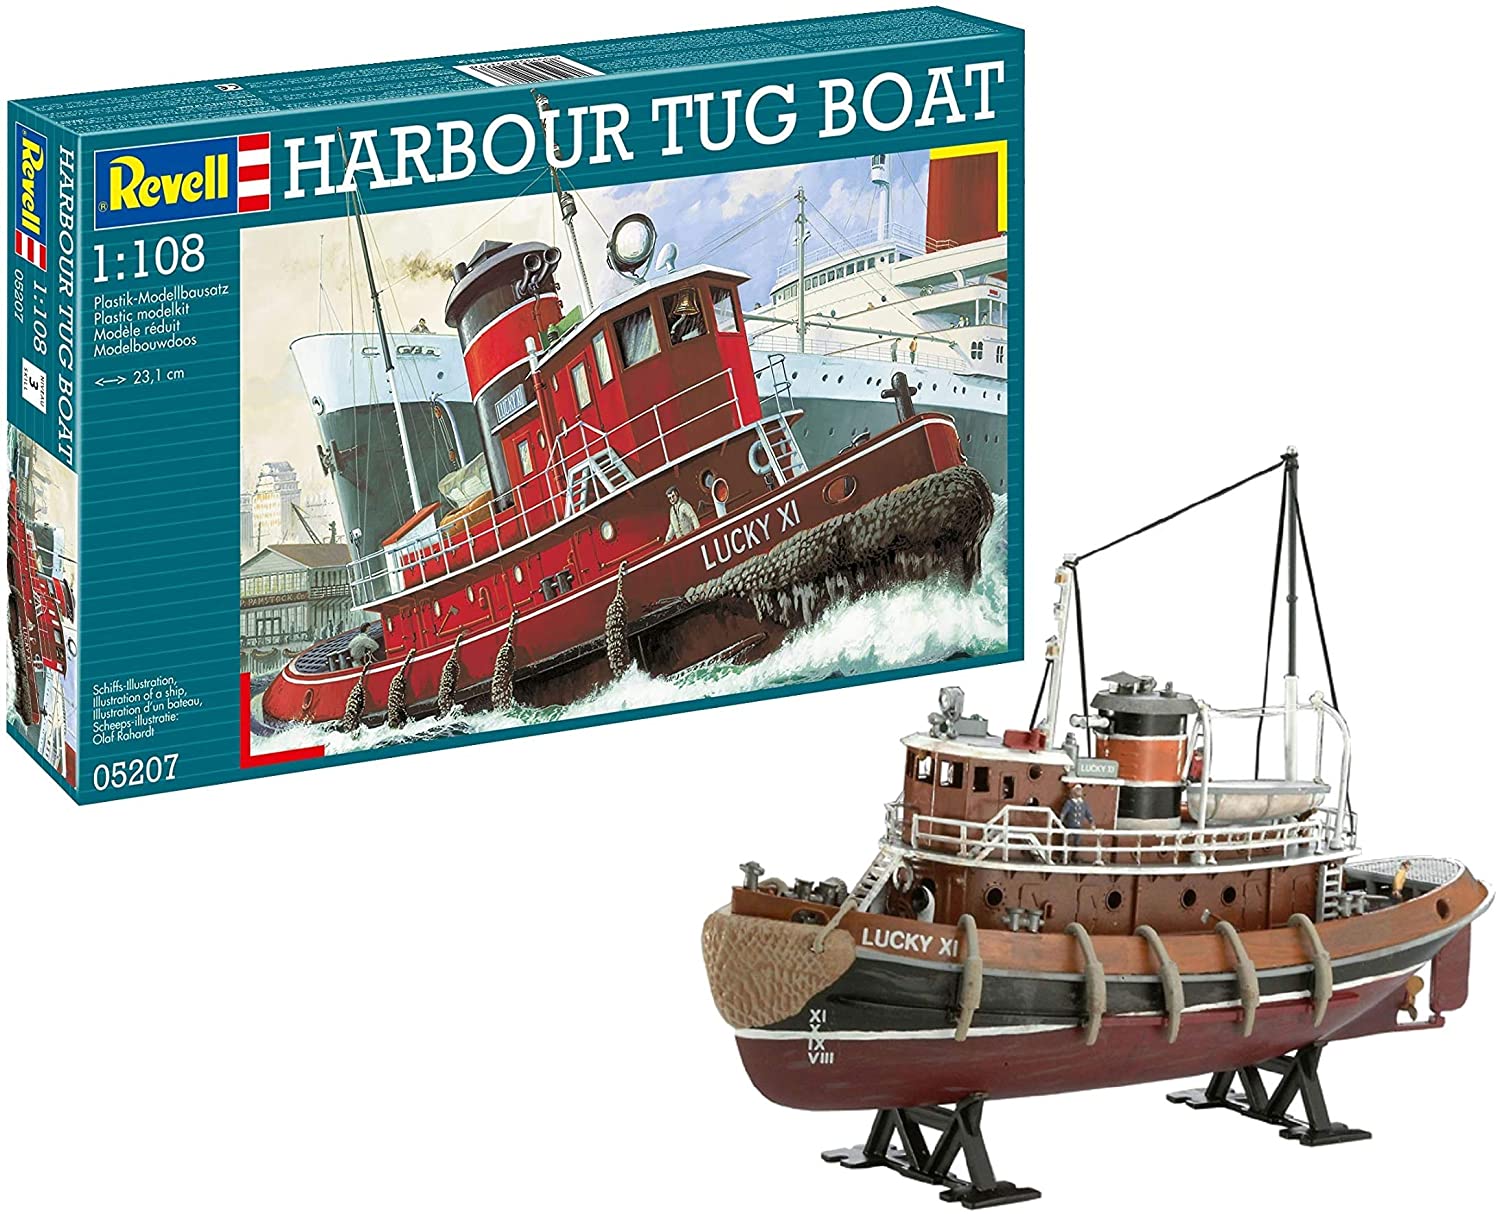 1/108 Harbour Tug Boat (Civil Ships)